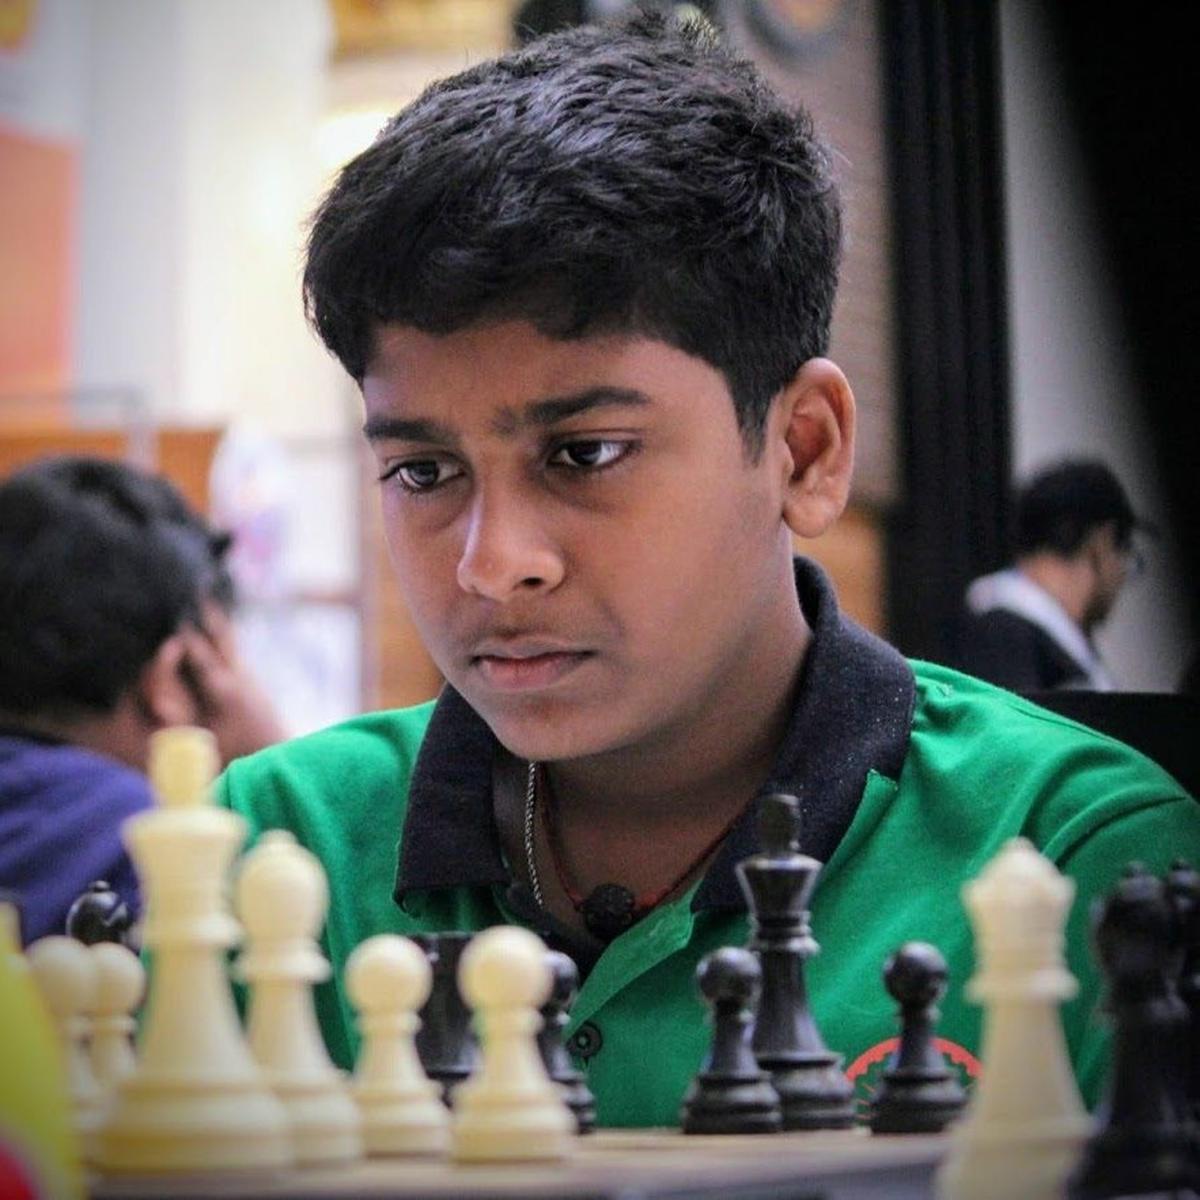 Chessmaster 11 (Grandmaster Edition) Price in India - Buy